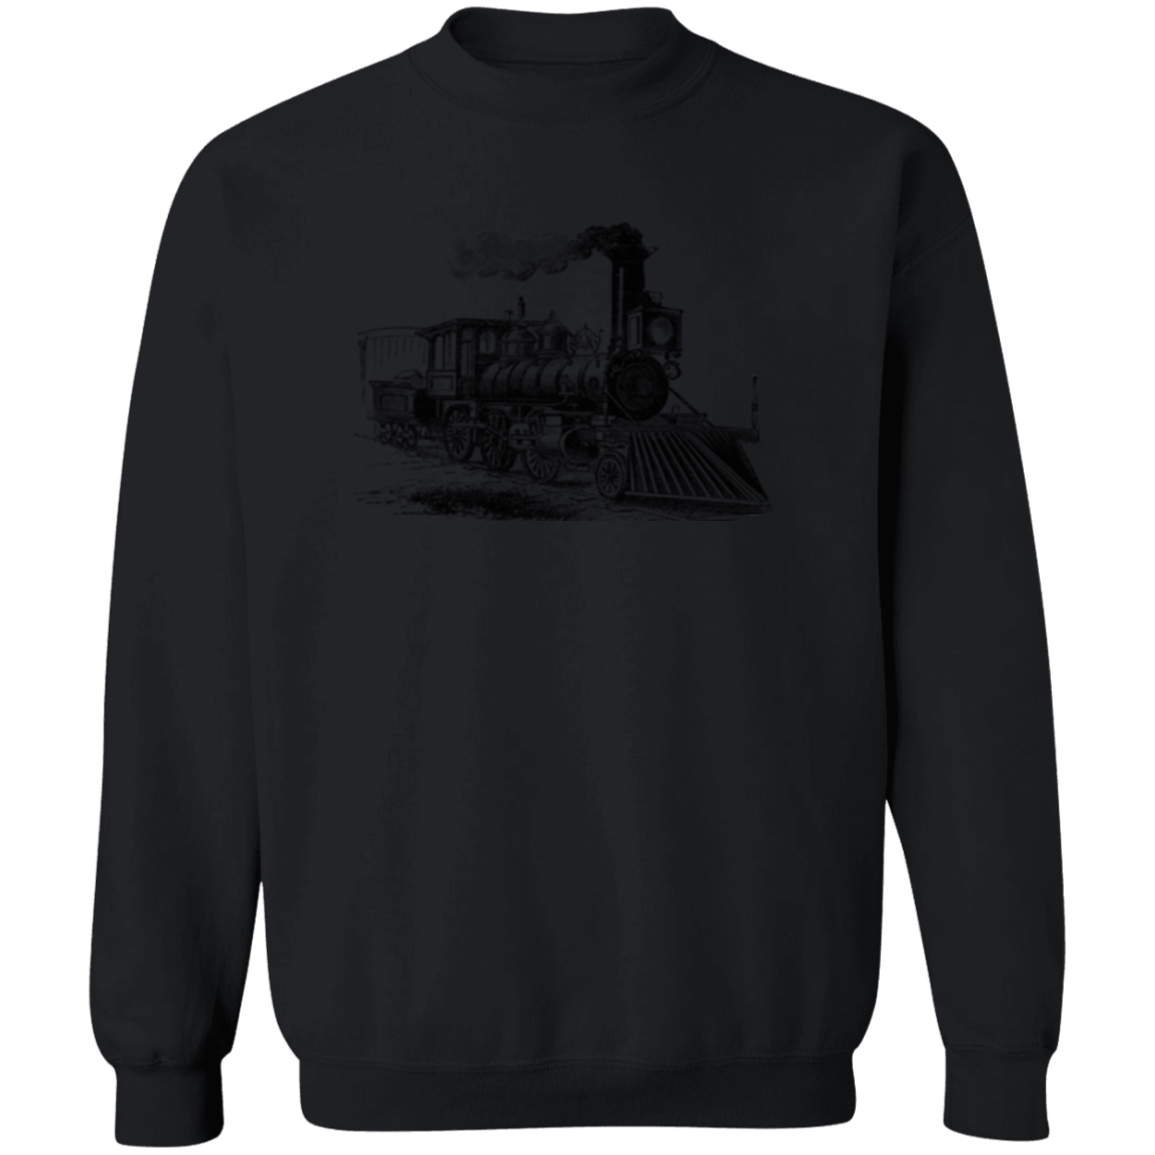 Vintage Train - T-shirts, Hoodies and Sweatshirts